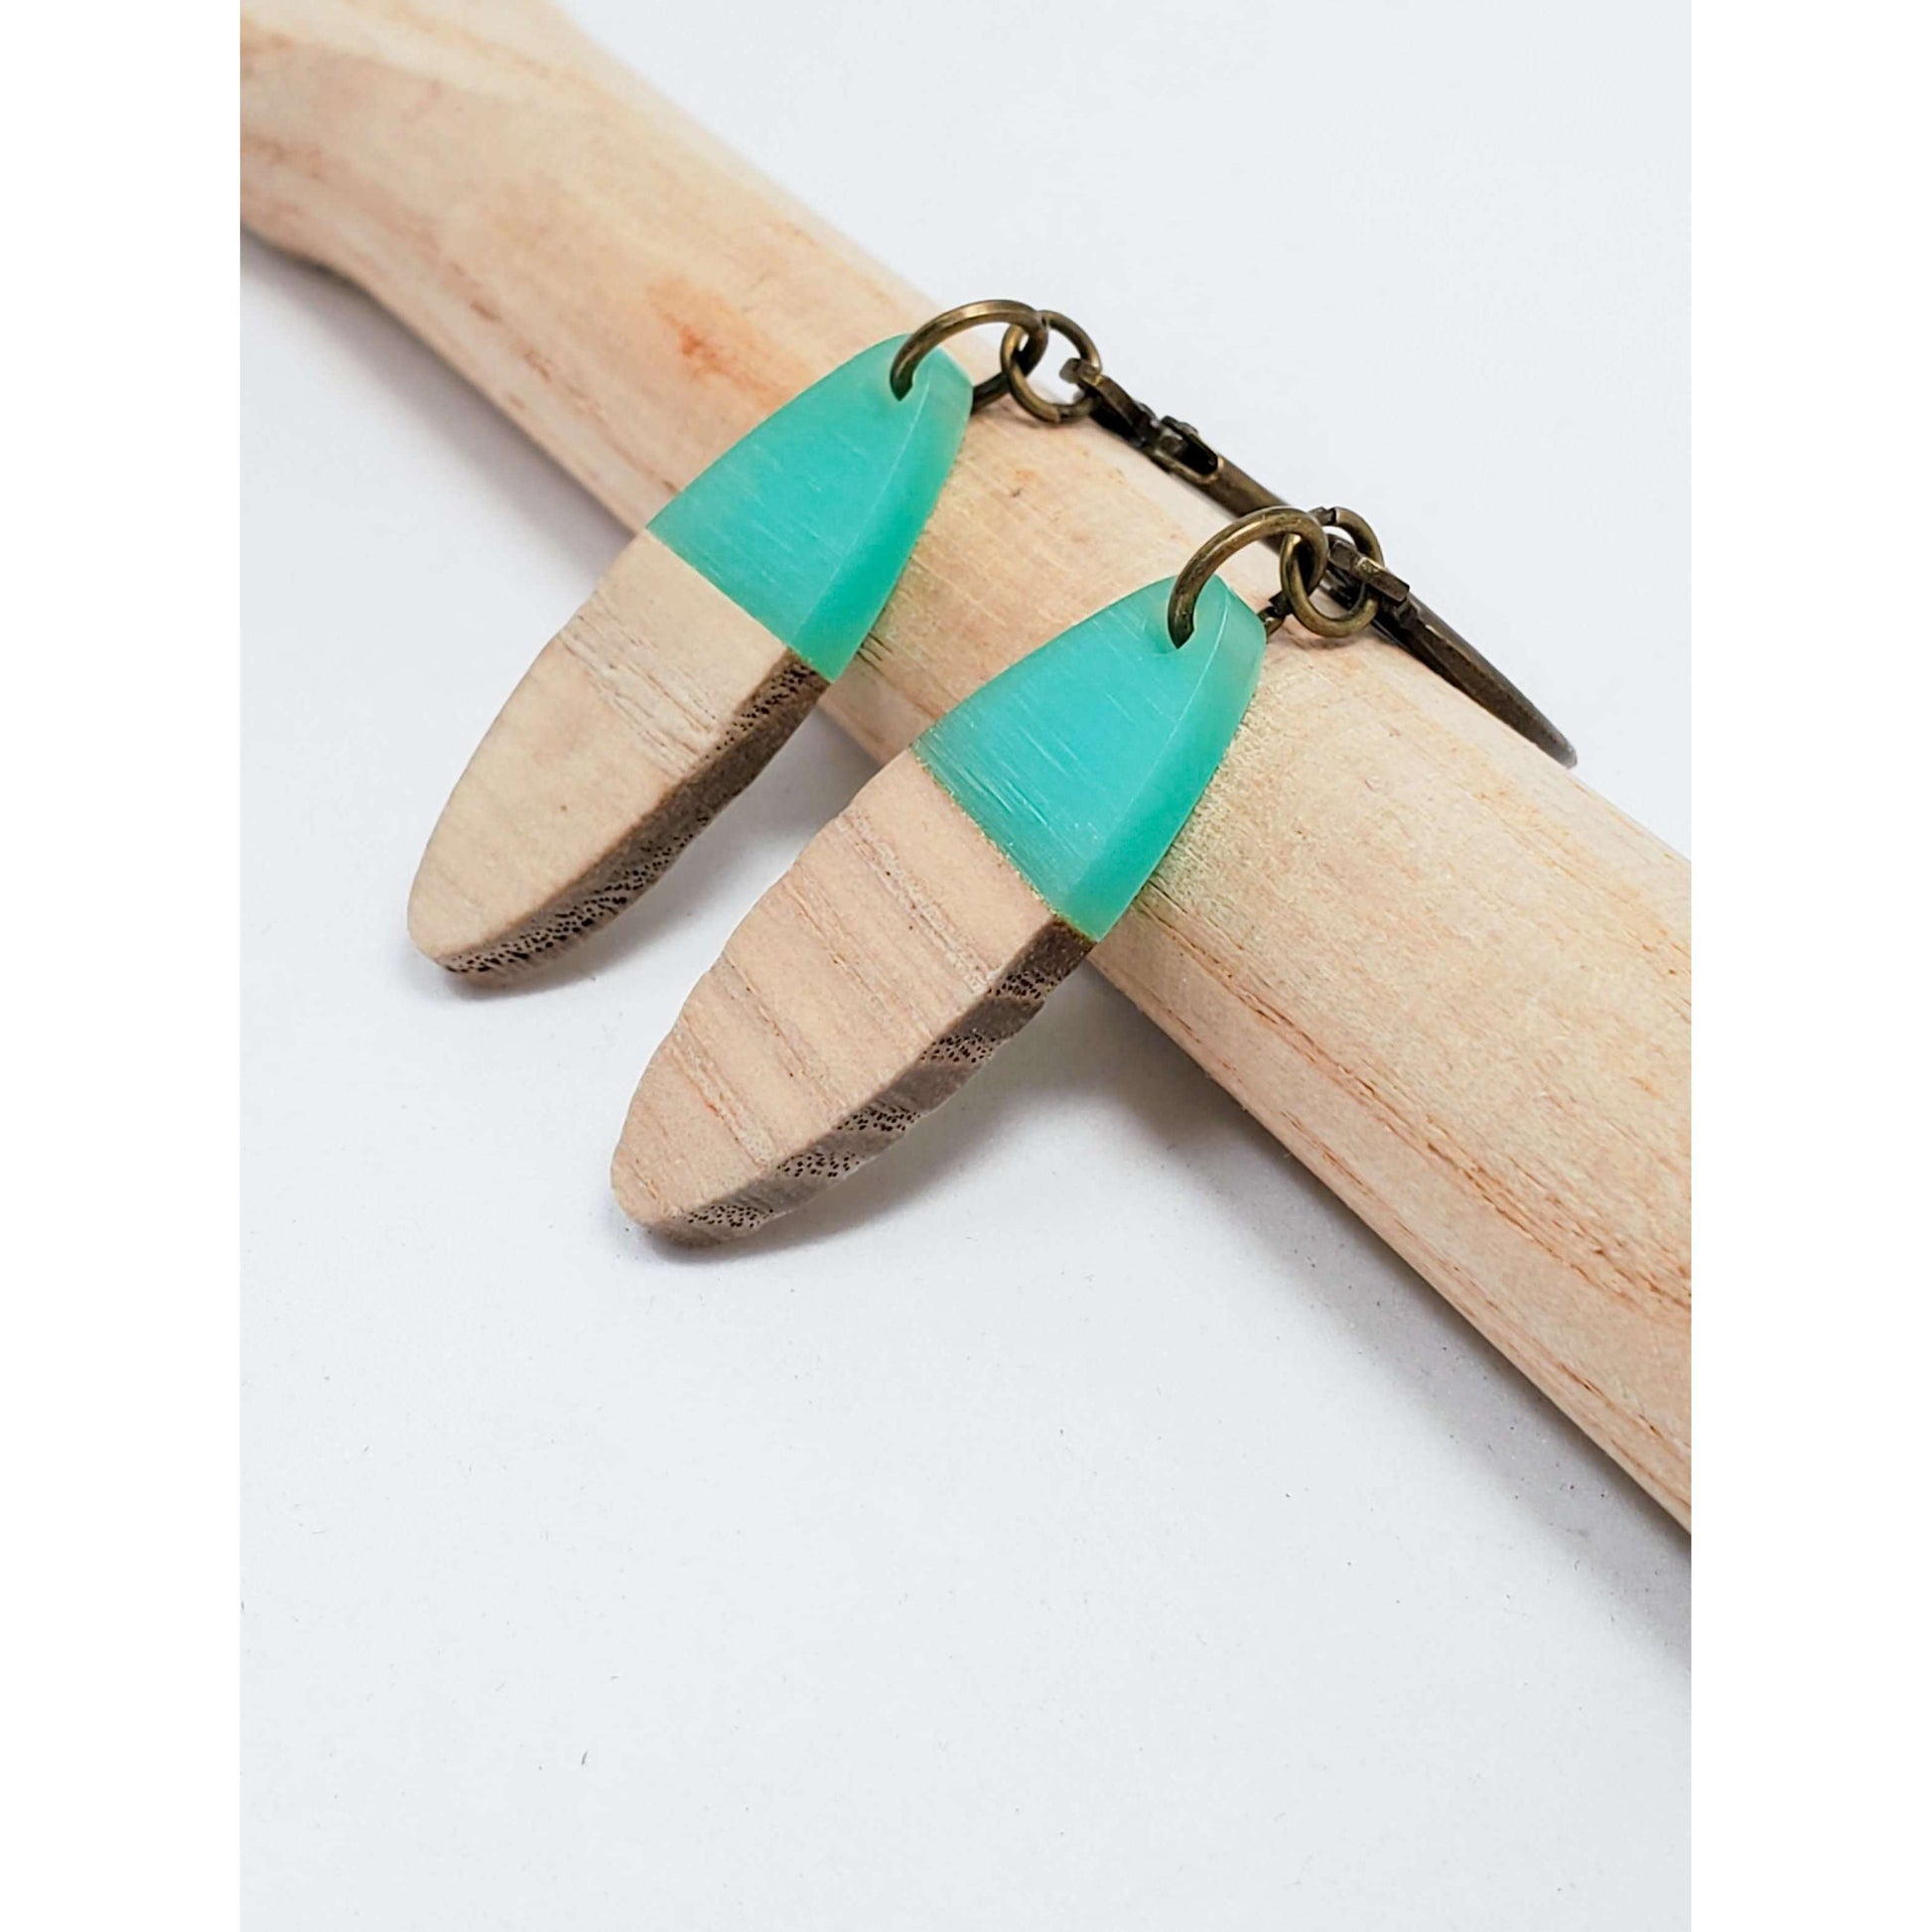 Turquoise Resin and Walnut Wood Earrings - Nicki Lynn Jewelry